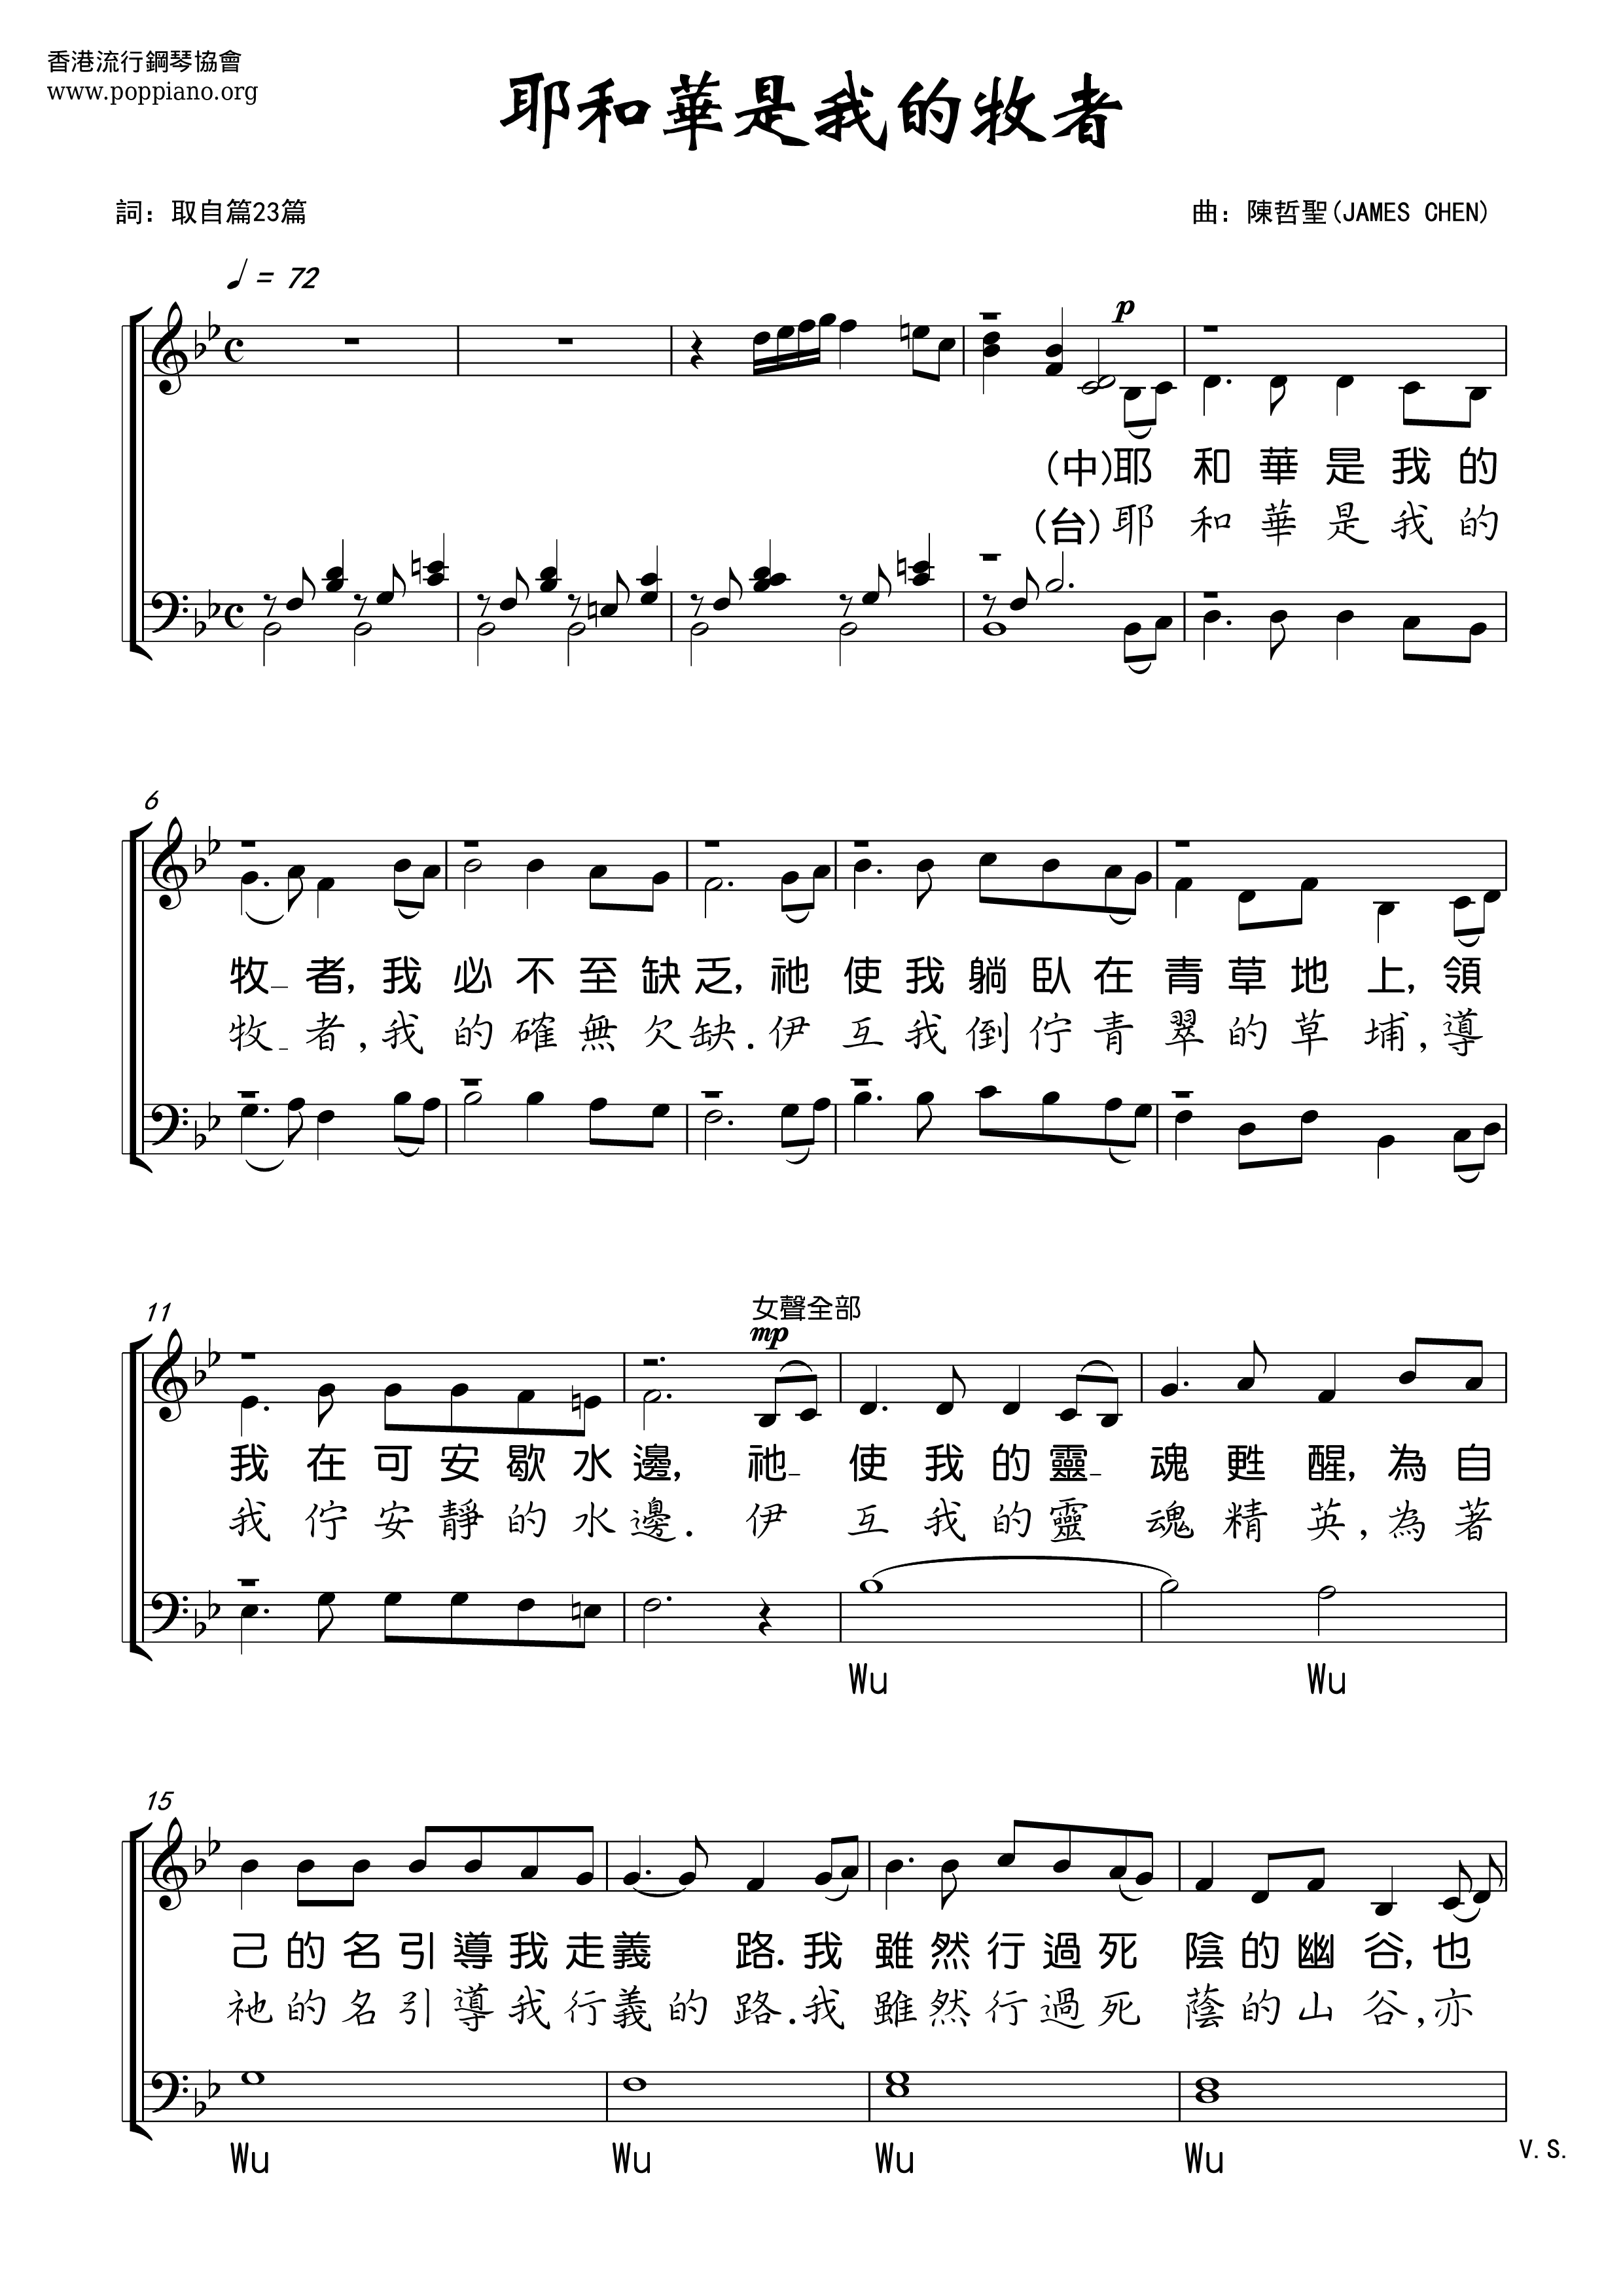 詩篇23篇 - 耶和華是我的牧者ピアノ譜